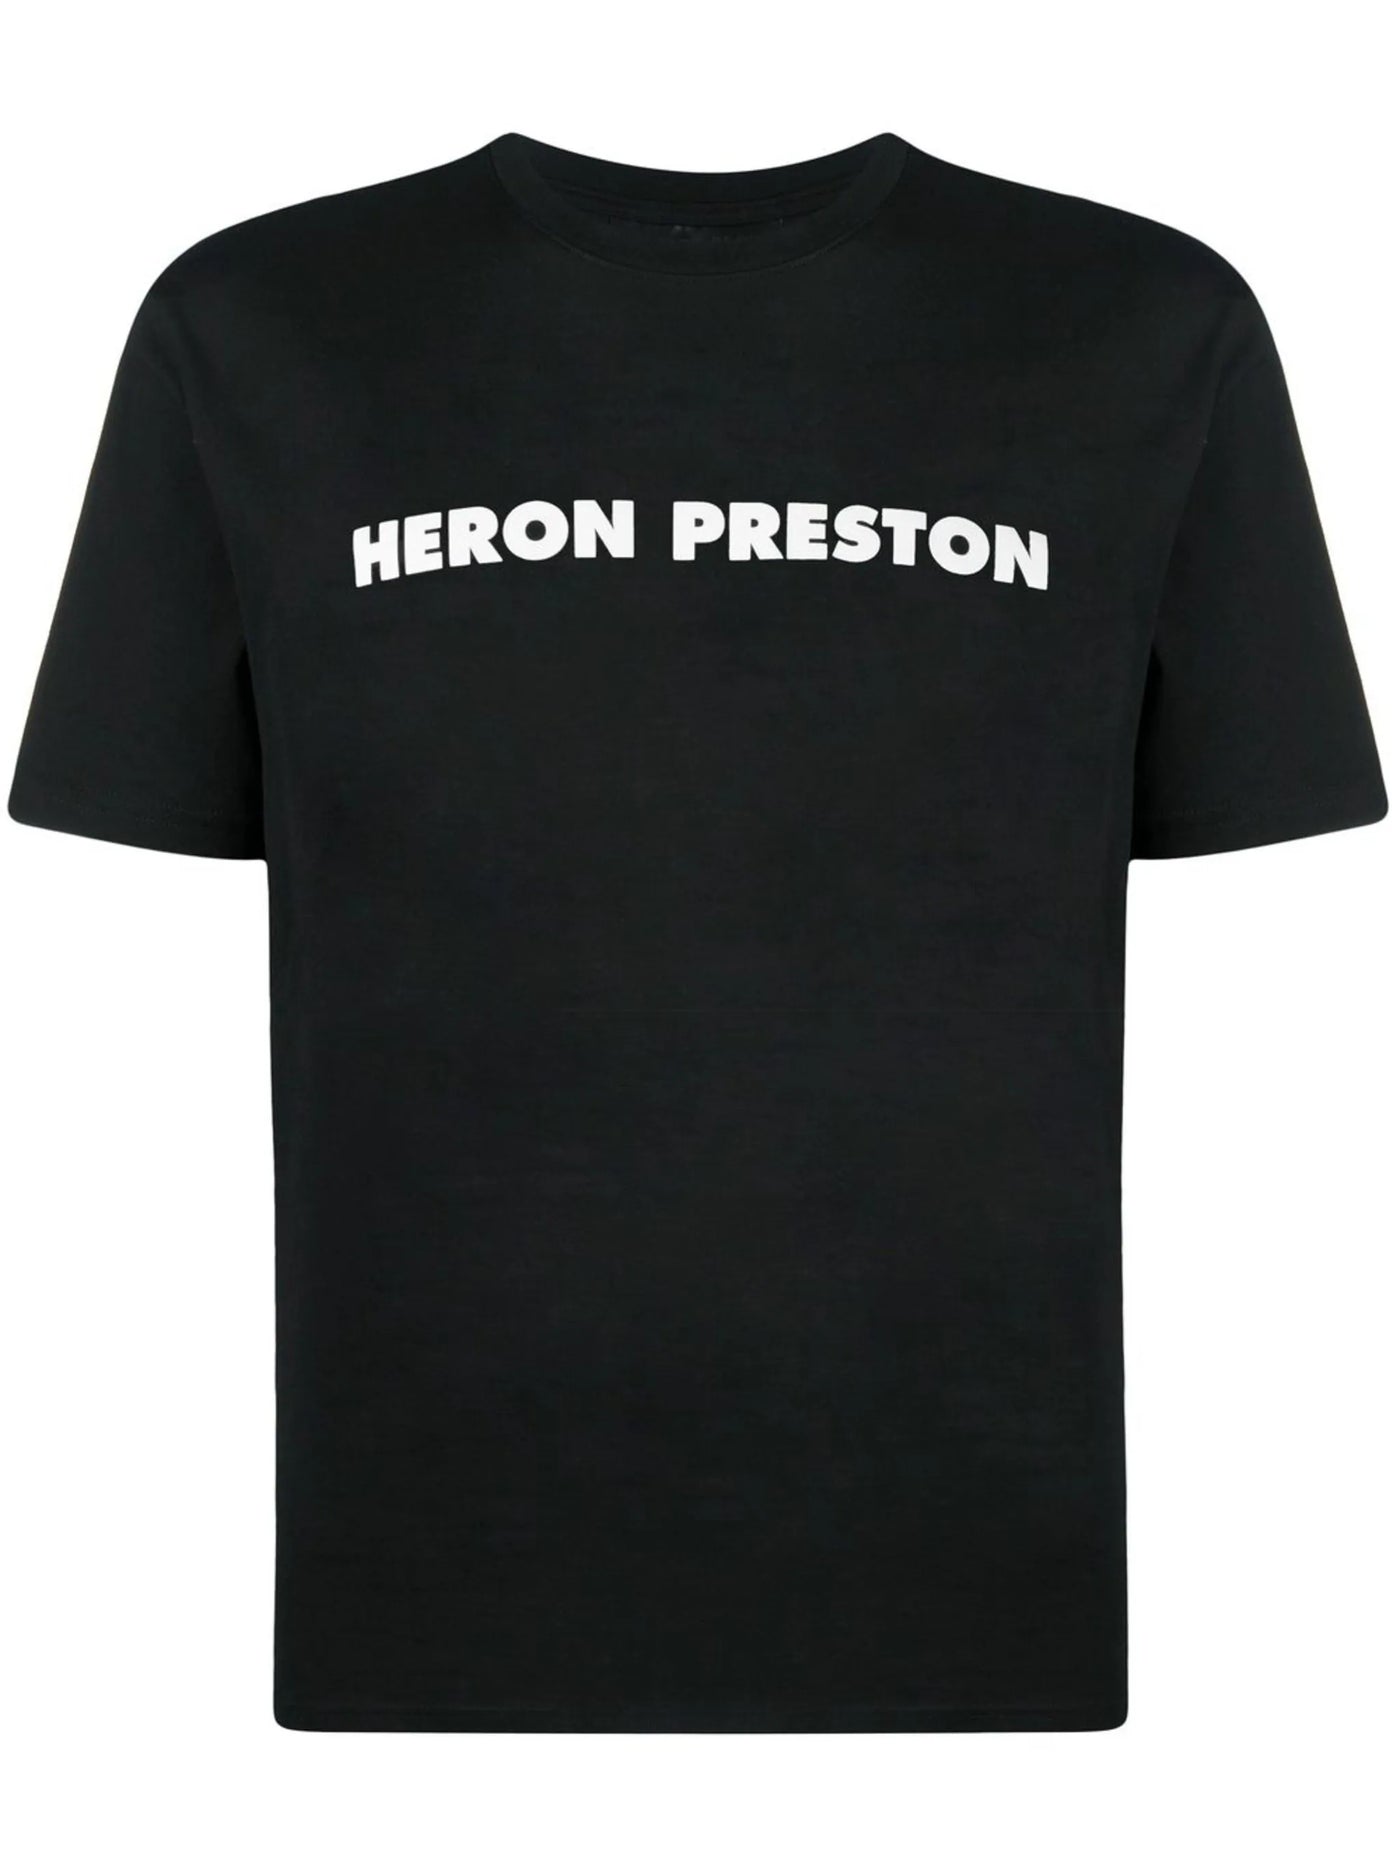 Heron Preston This is Not T-Shirt in Black